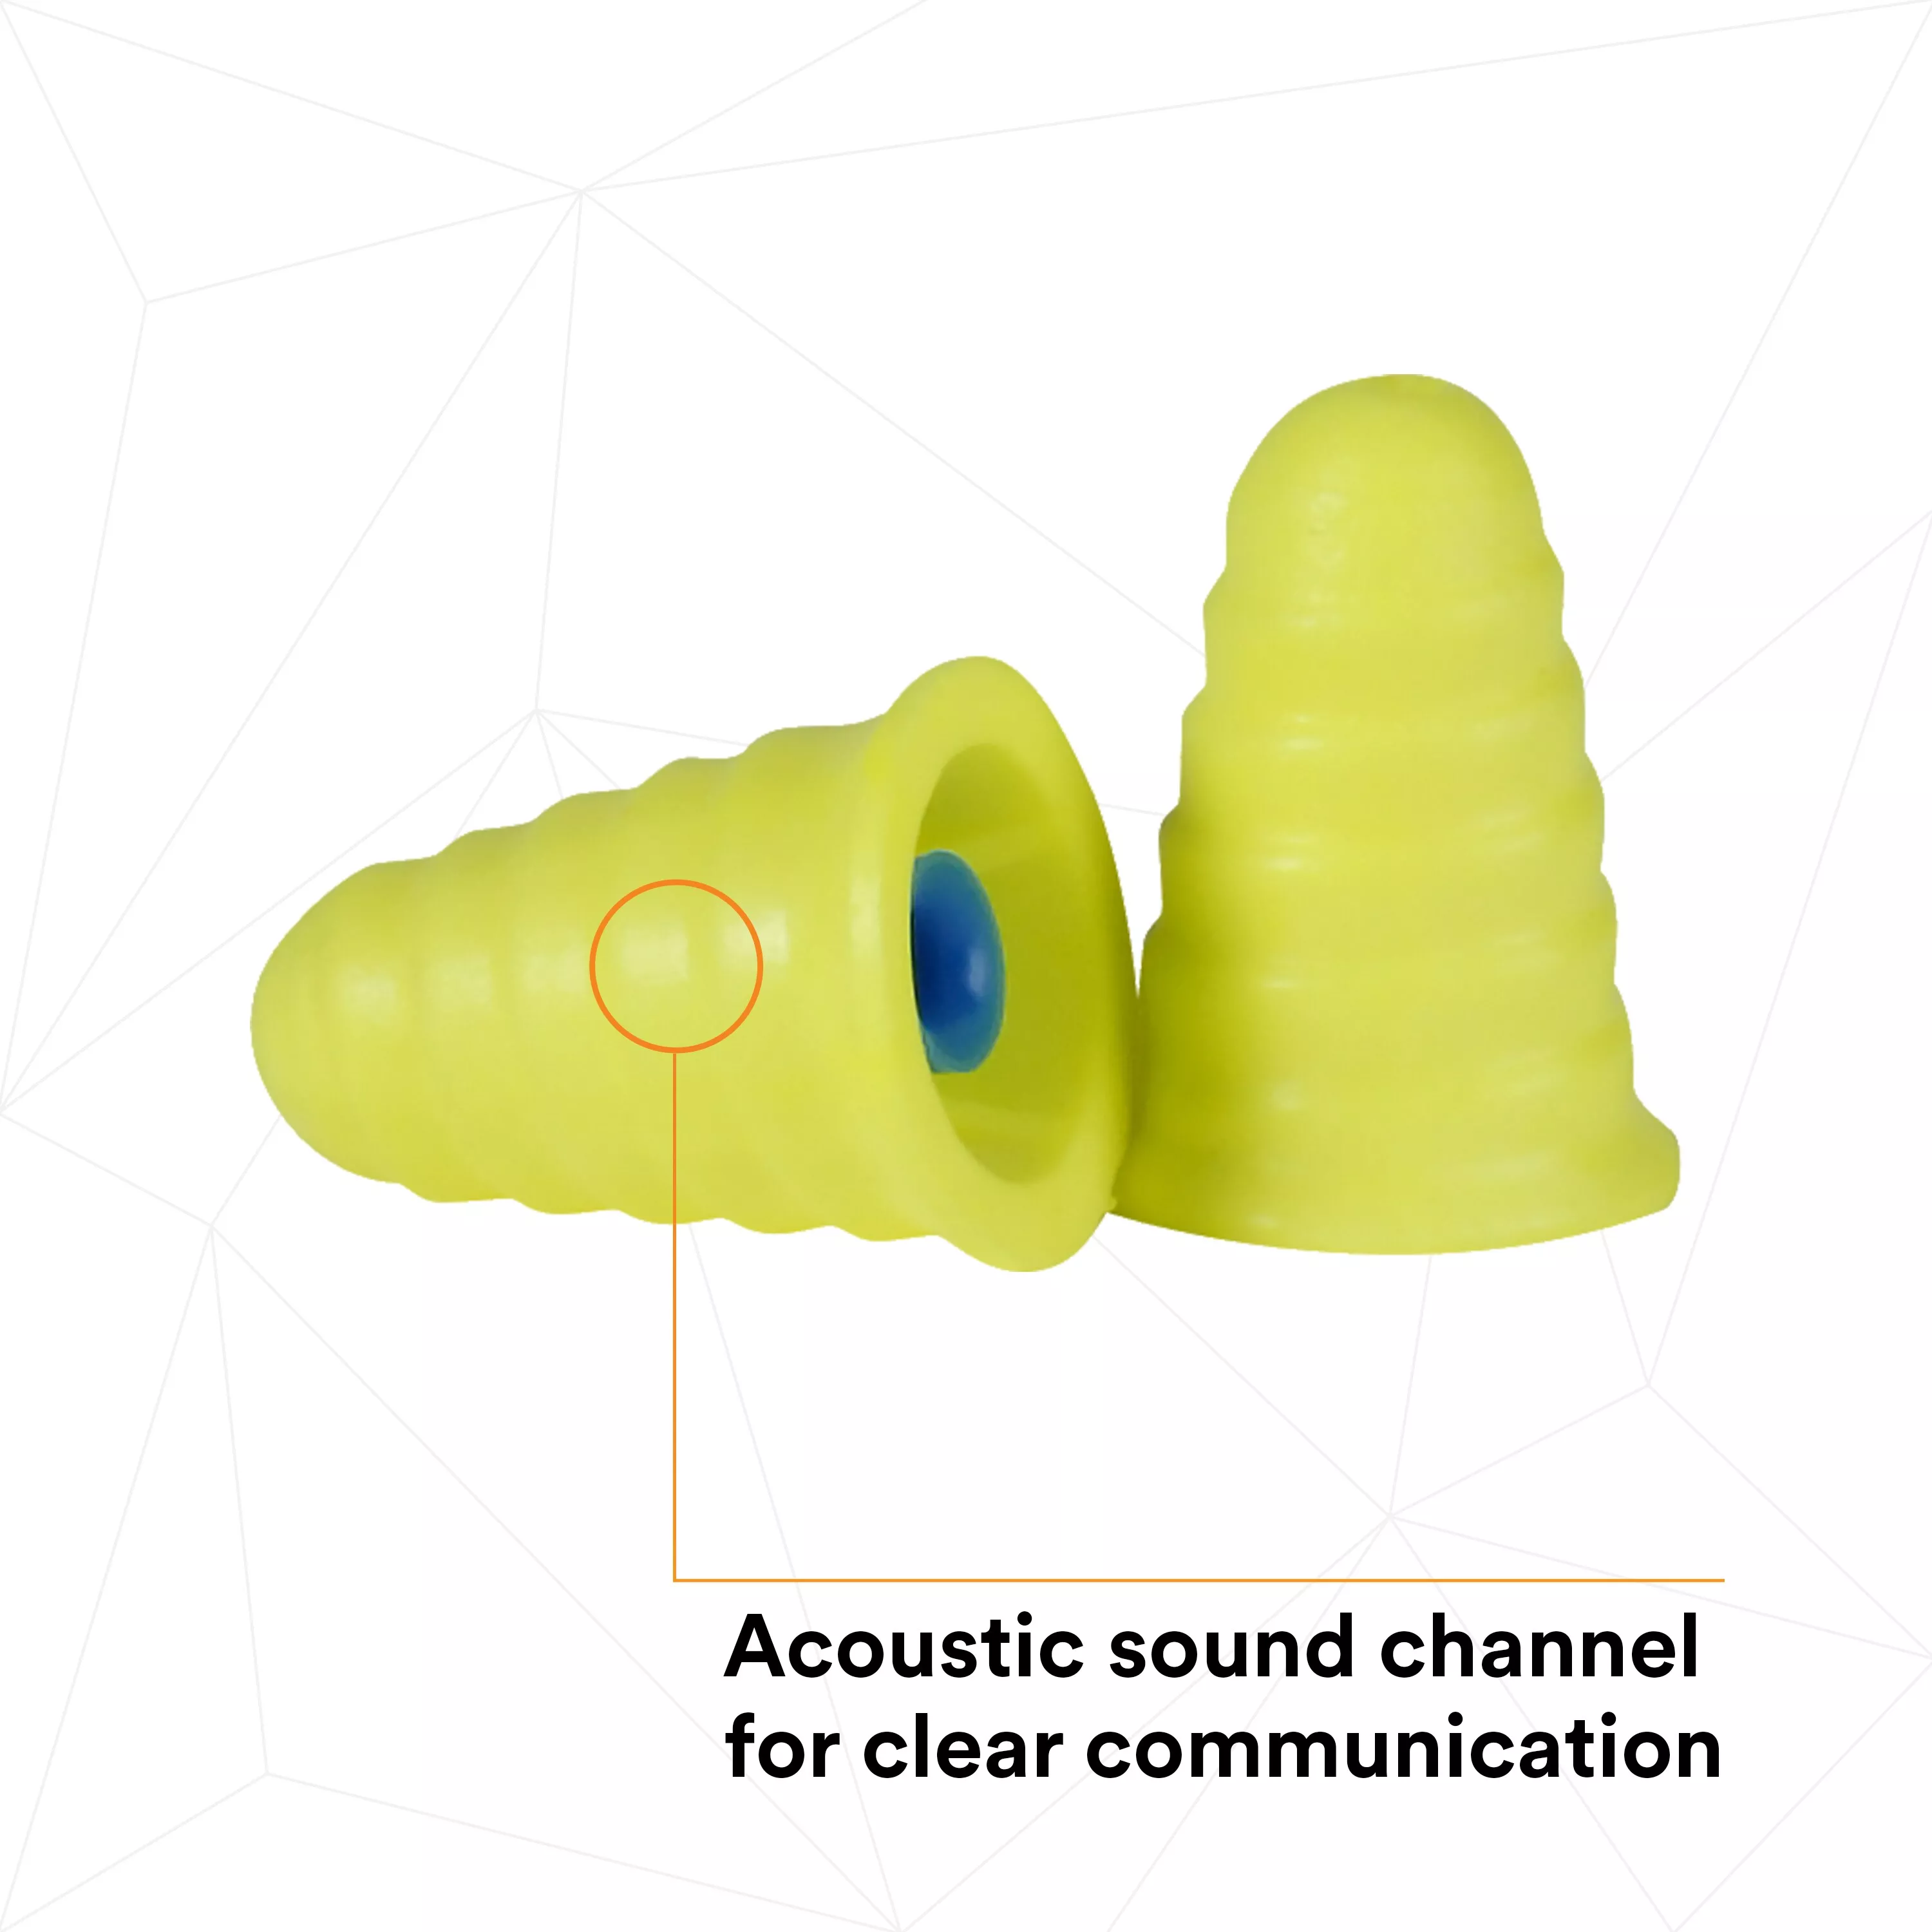 SKU 7100158983 | 3M™ E-A-R™ Skull Screws™ Metal Detectable Communication Ear Tips